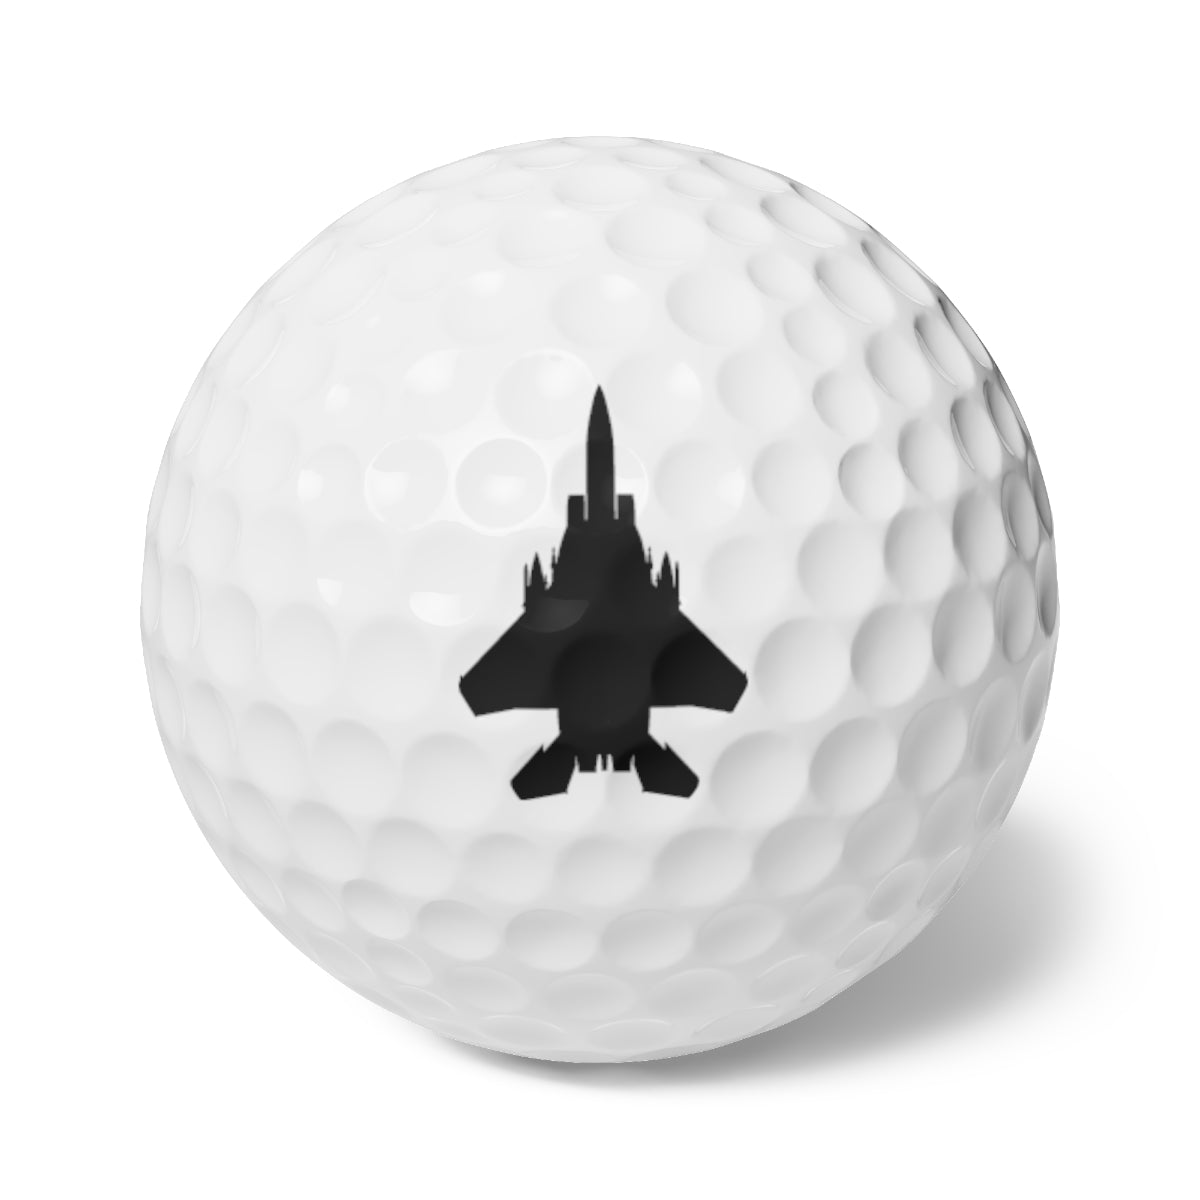 F-15E Top Silhouette Golf Balls, 6pcs